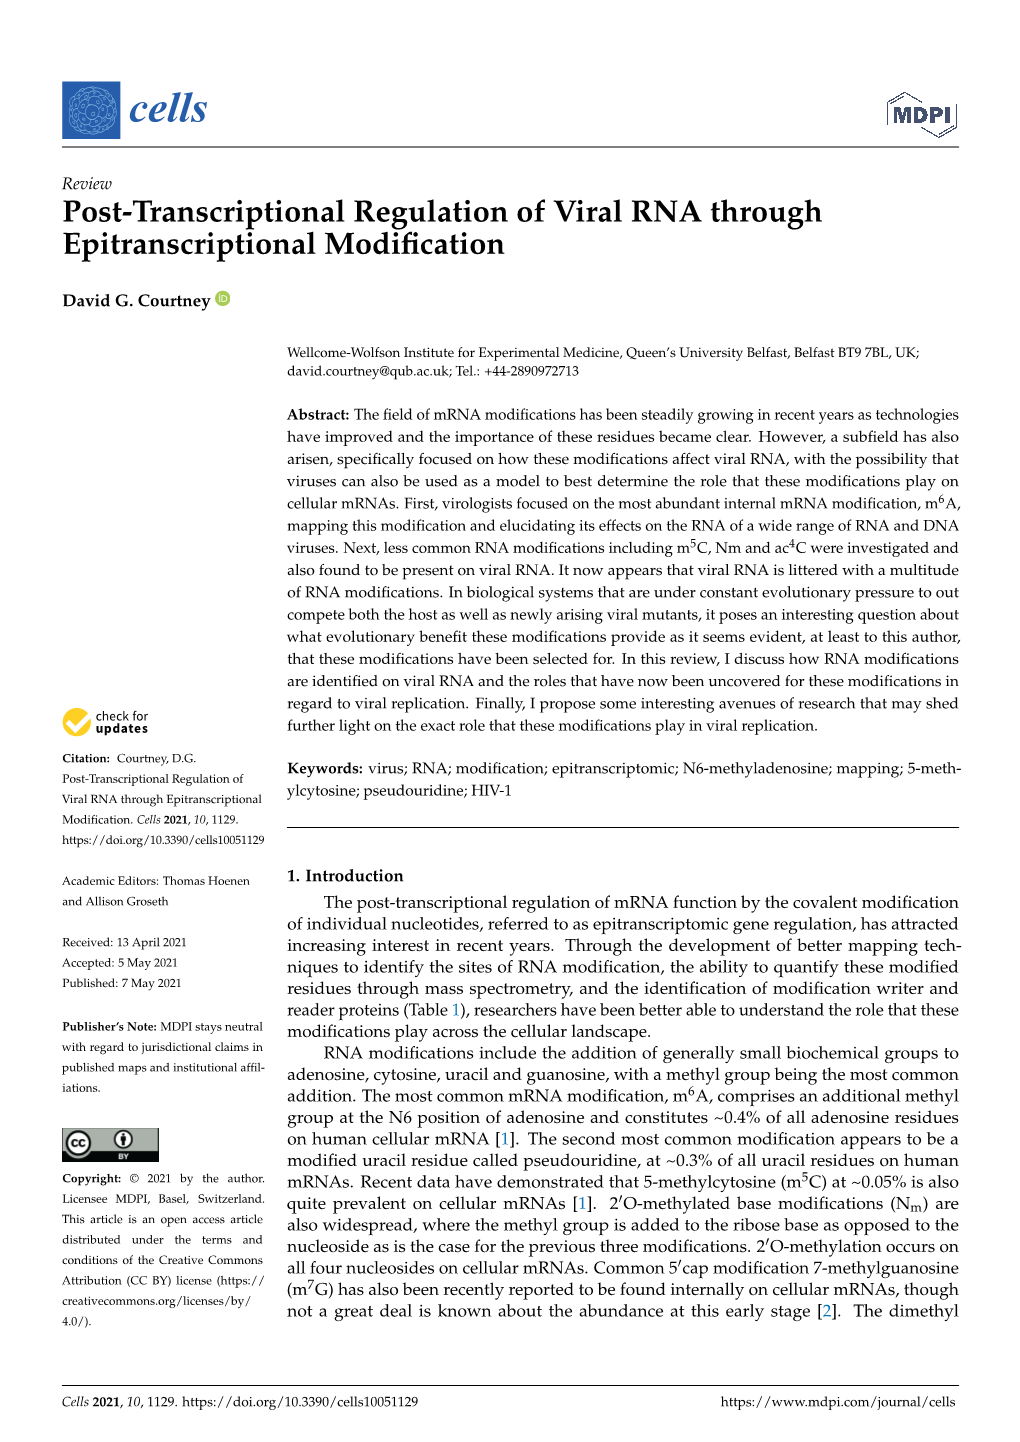 Post-Transcriptional Regulation of Viral RNA Through Epitranscriptional Modification